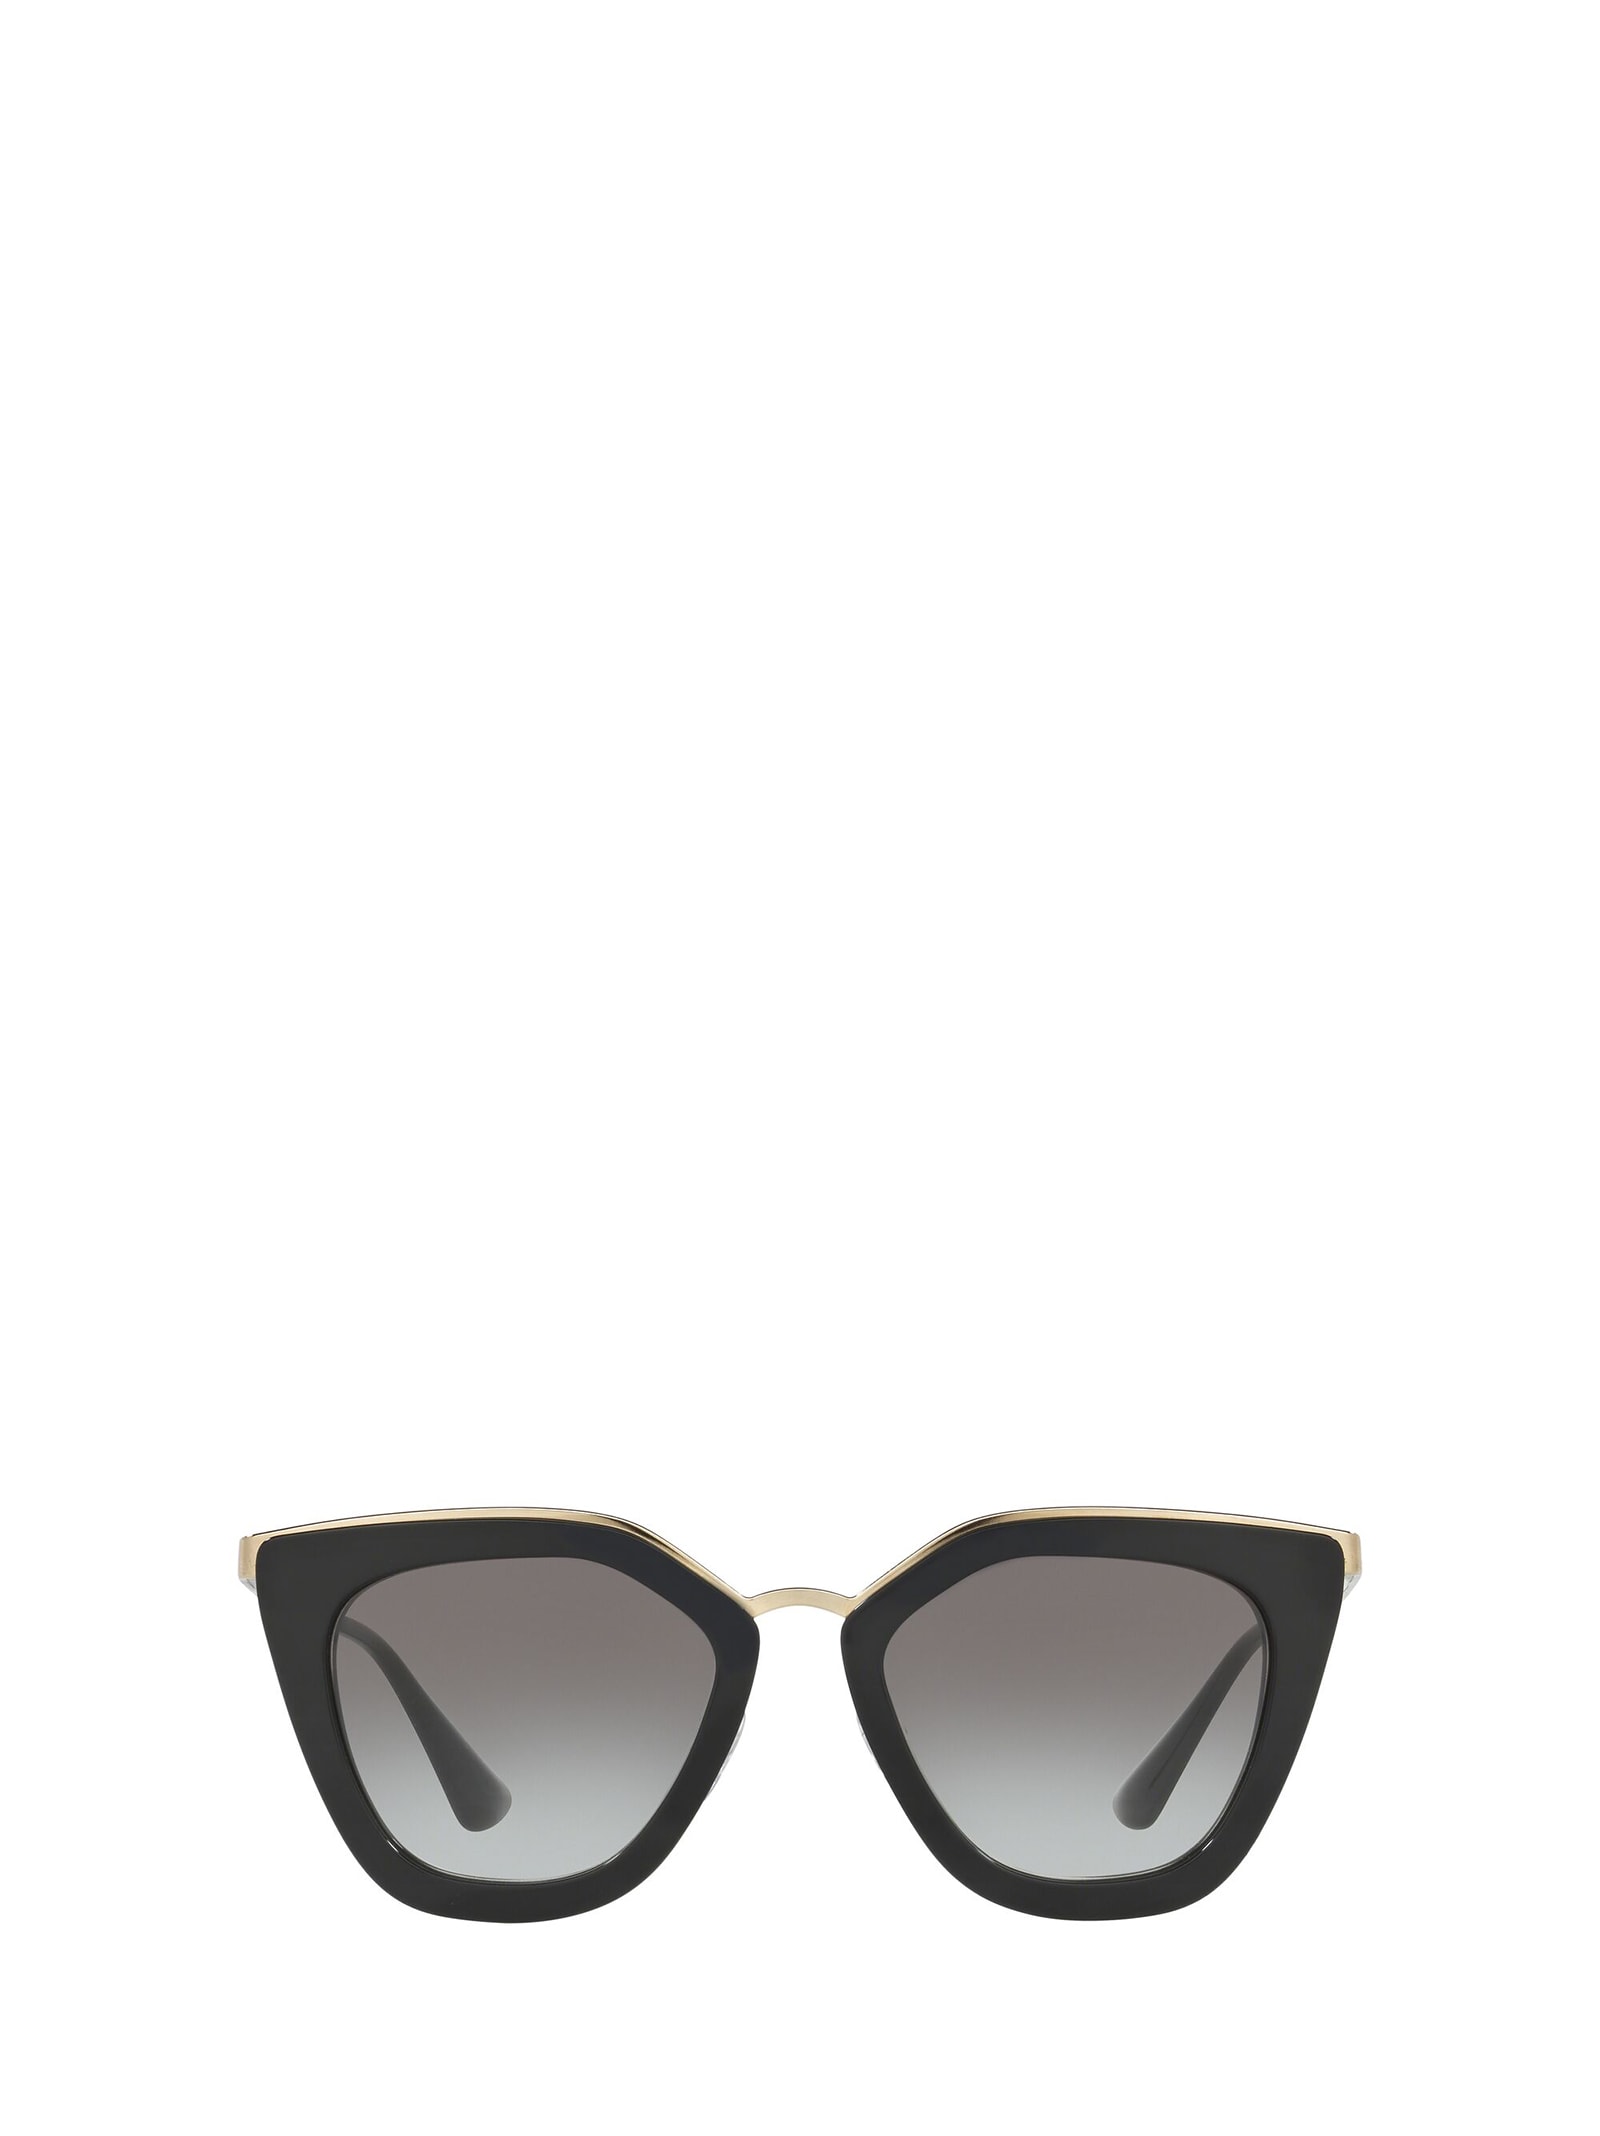 Prada Prada Pr 53ss Black Sunglasses